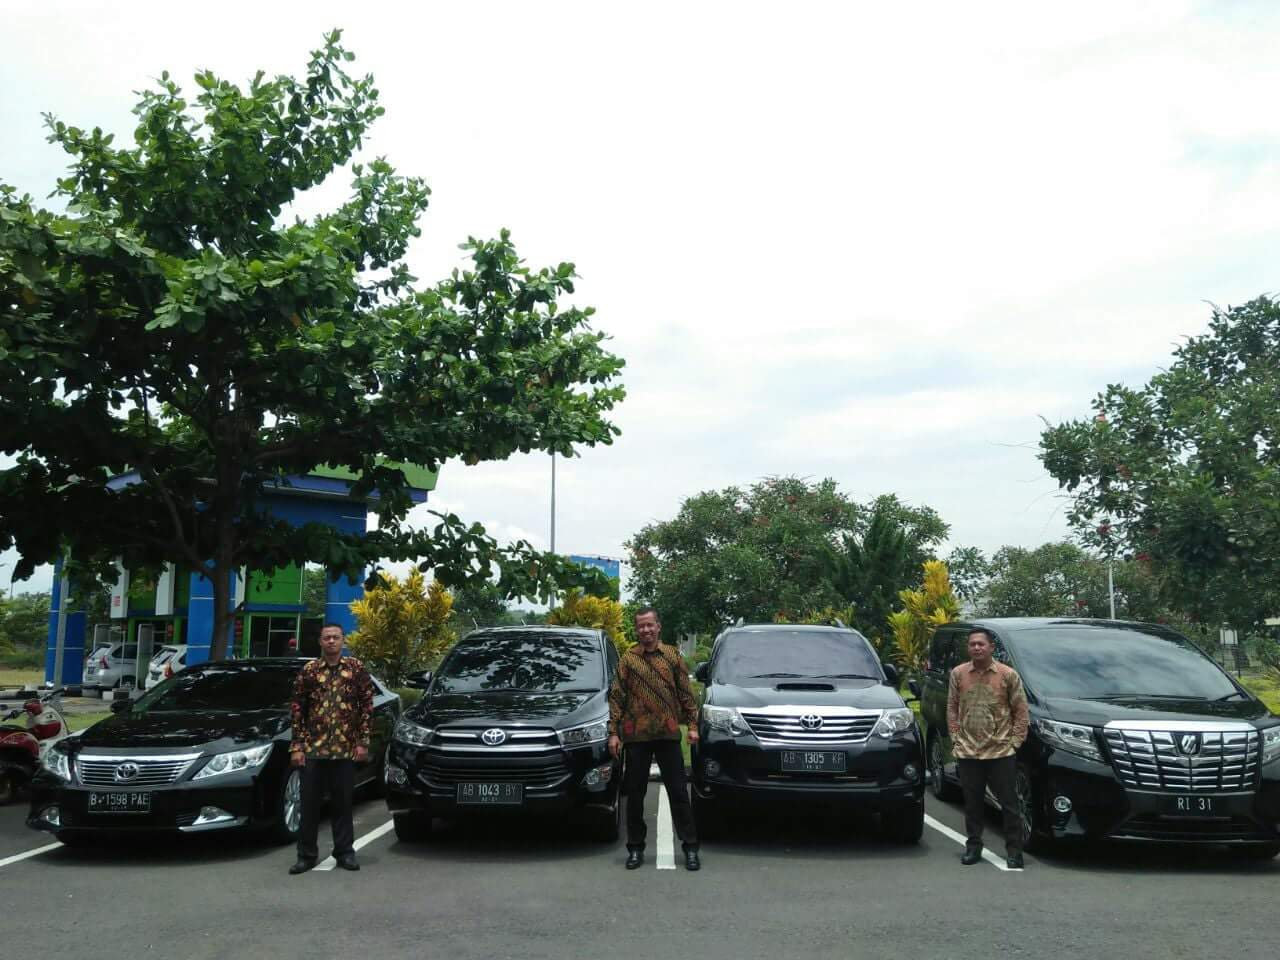 Rental Mobil Yogya | Jogja Rent Car Sewa Mobil Yogyakarta Photo